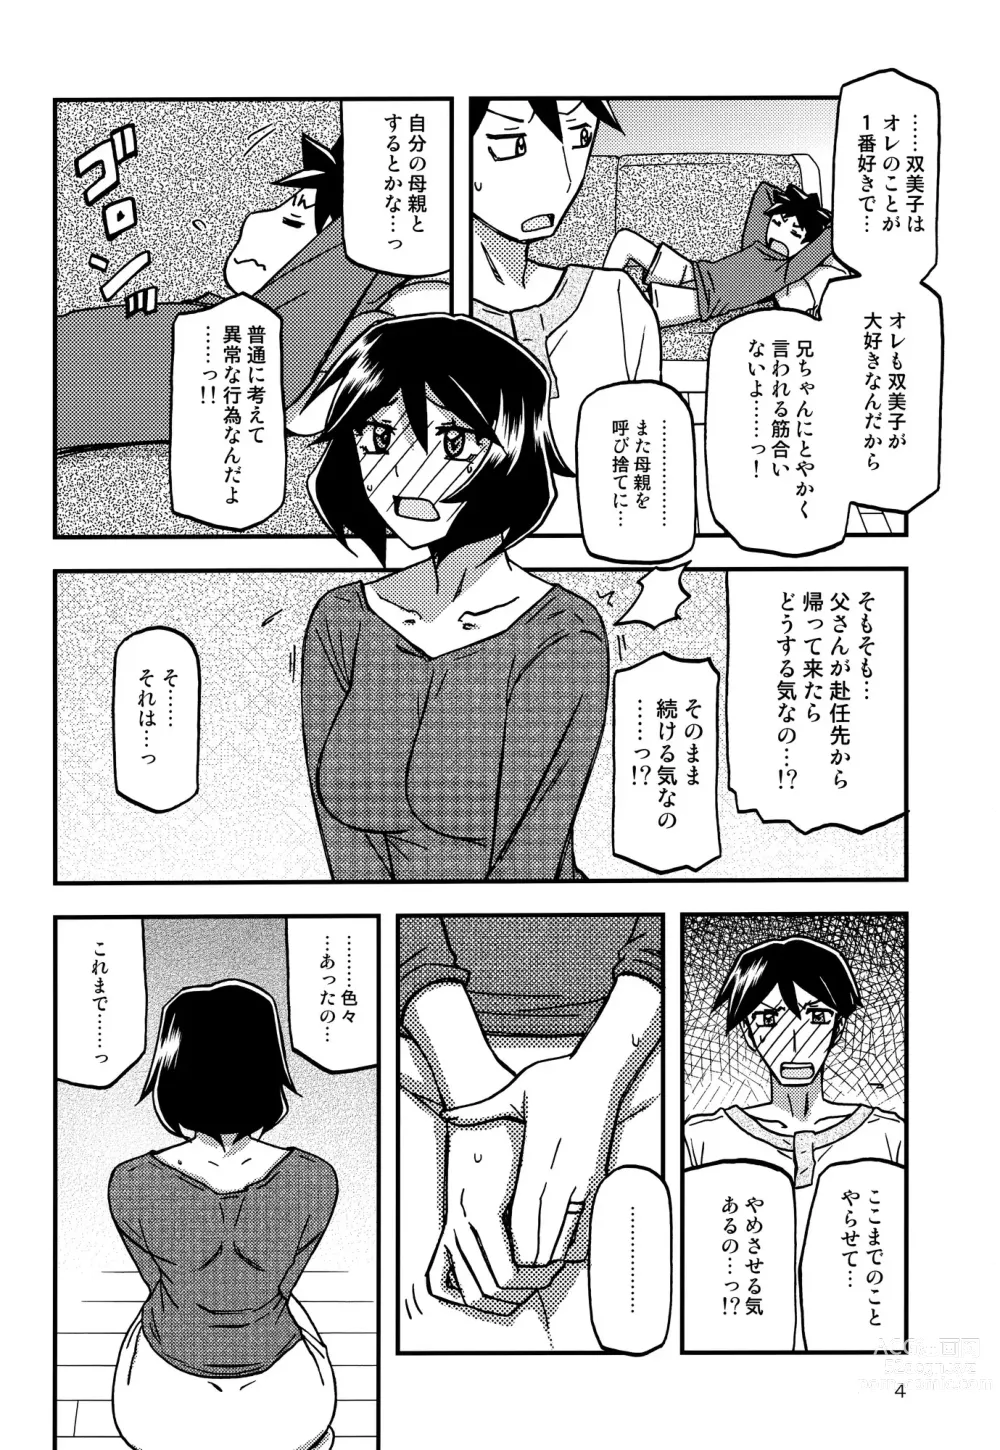 Page 3 of doujinshi Akebi no Mi - Fumiko CONTINUATION